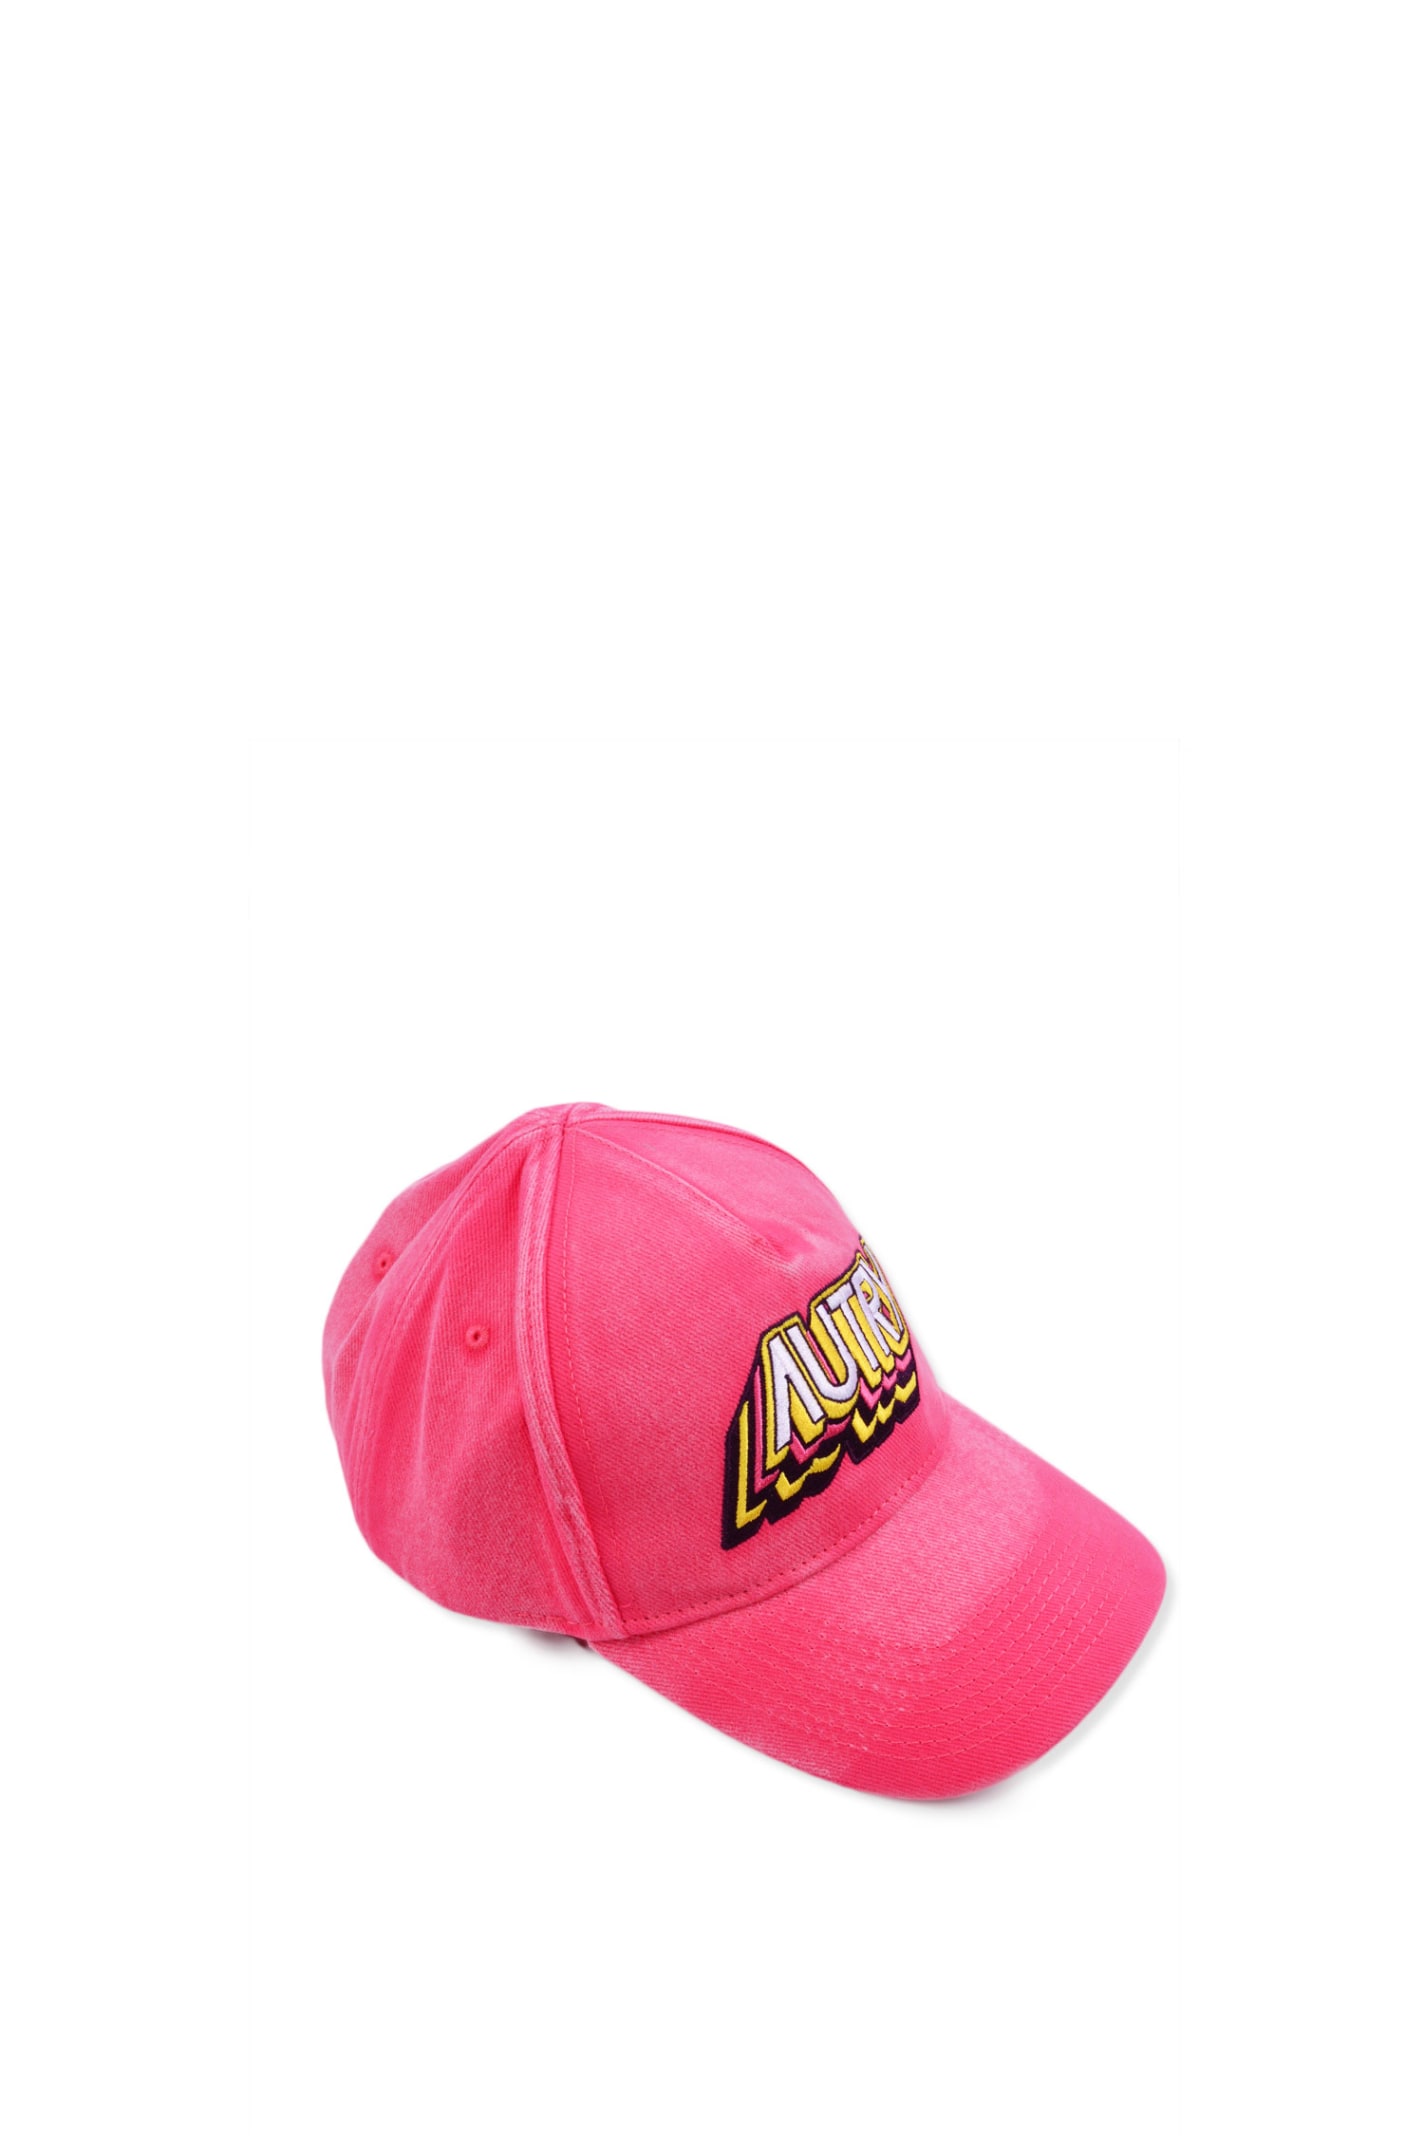 Shop Autry Hat In Fuchsia